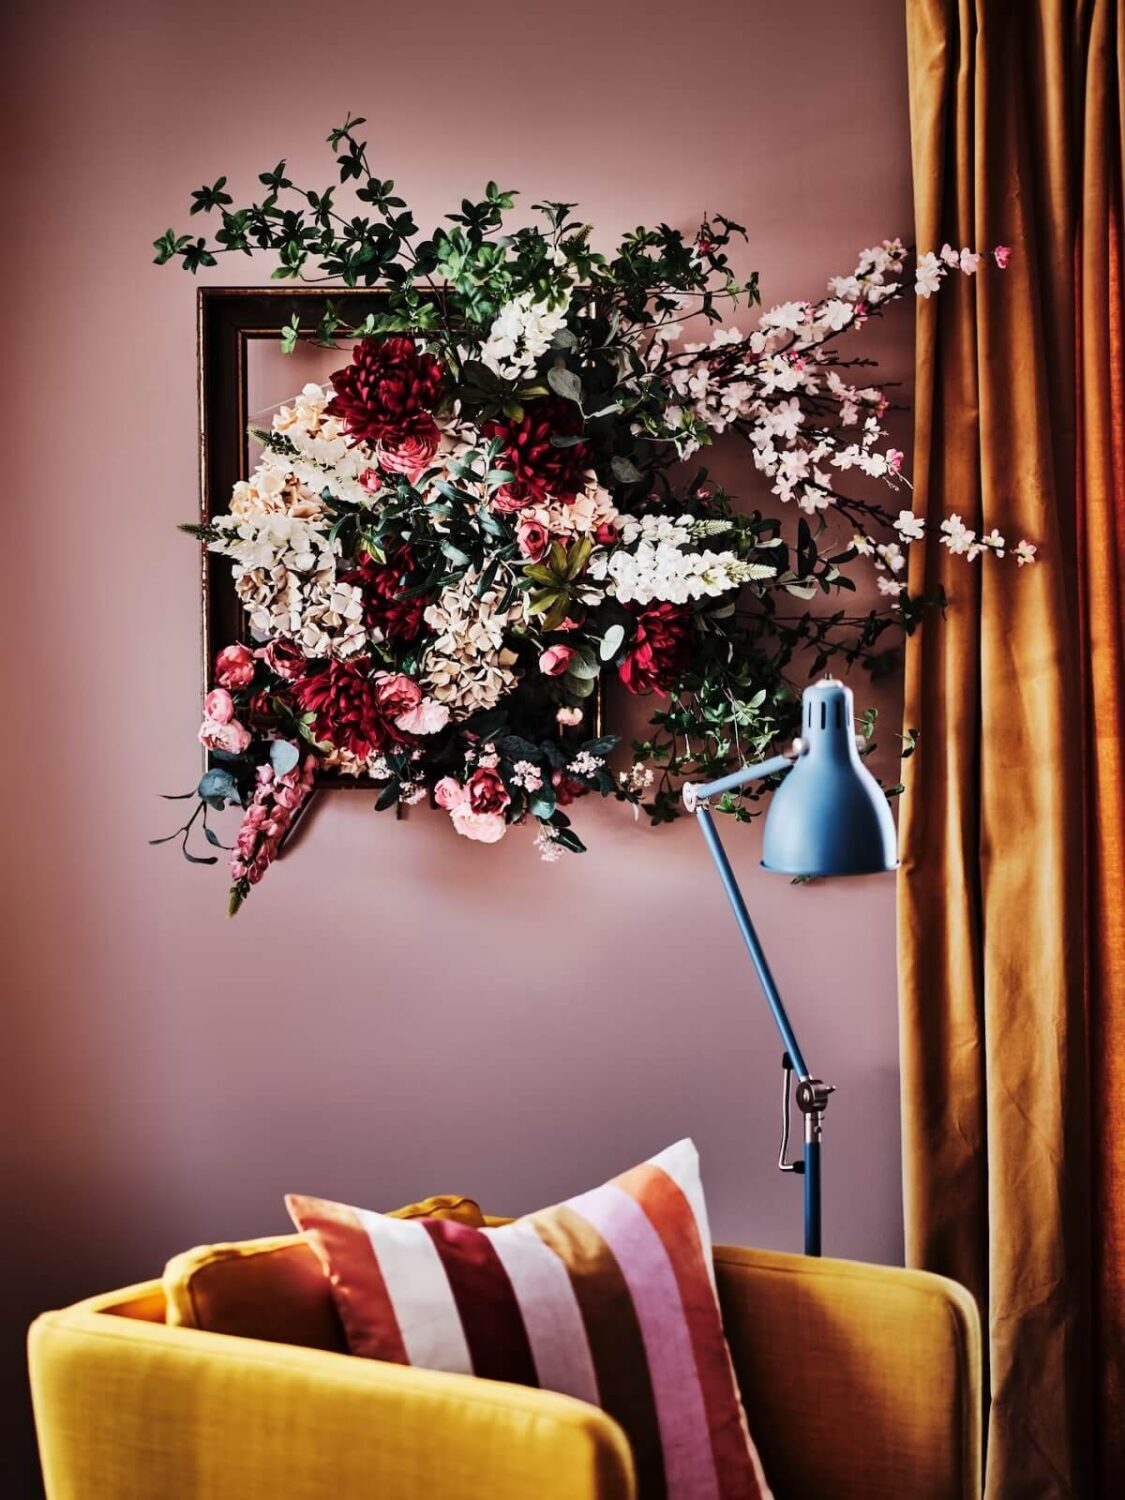 ikea floral display warm romantic interior style nordroom